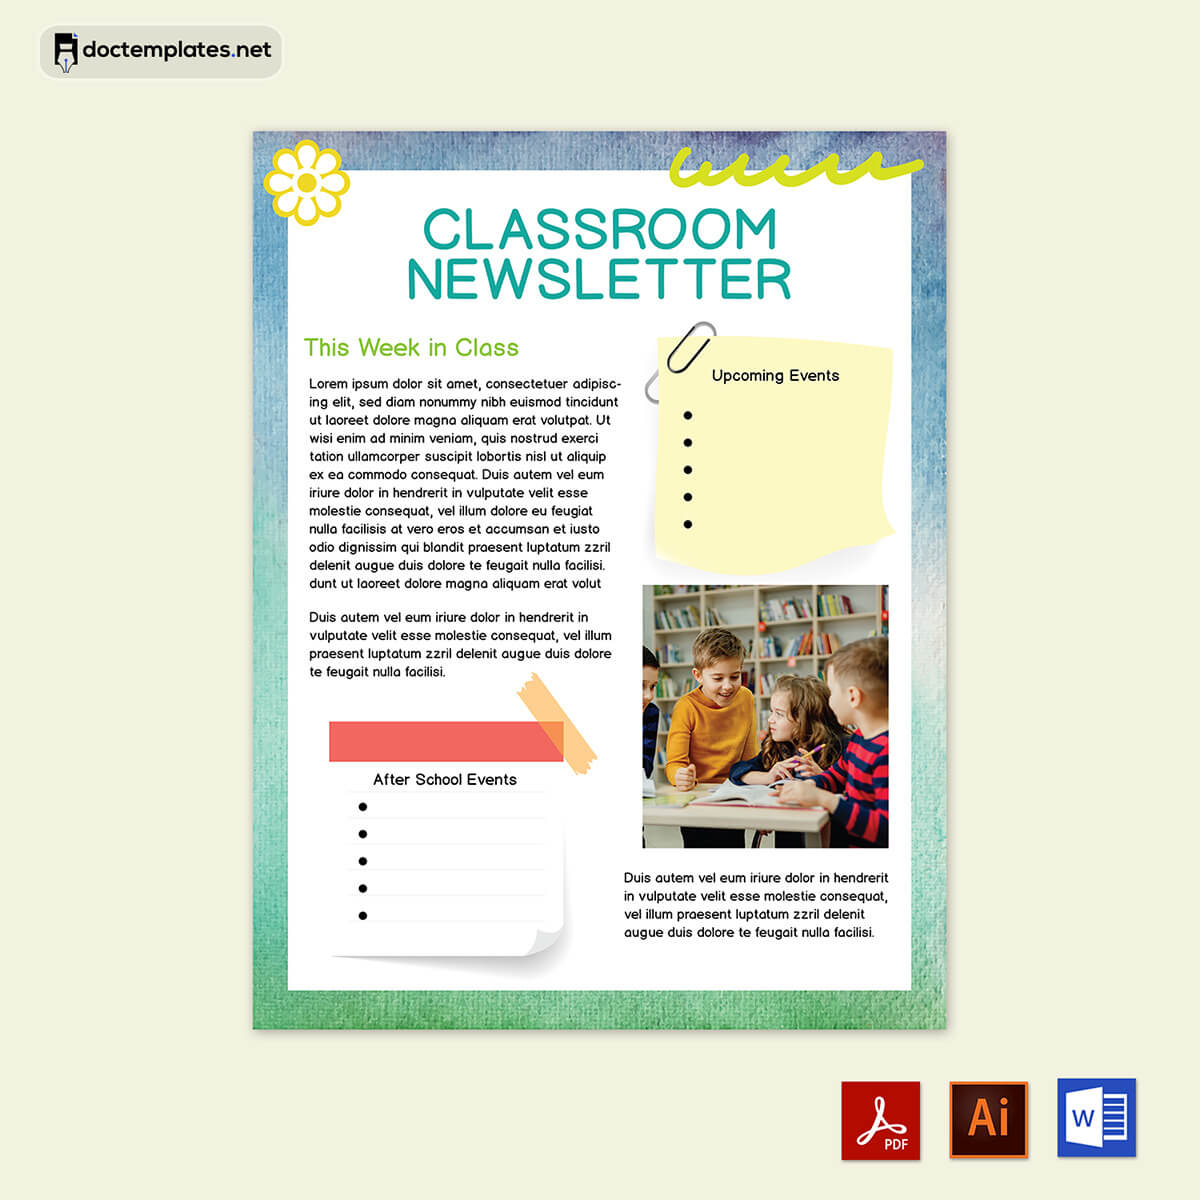 free editable classroom newsletter templates
02